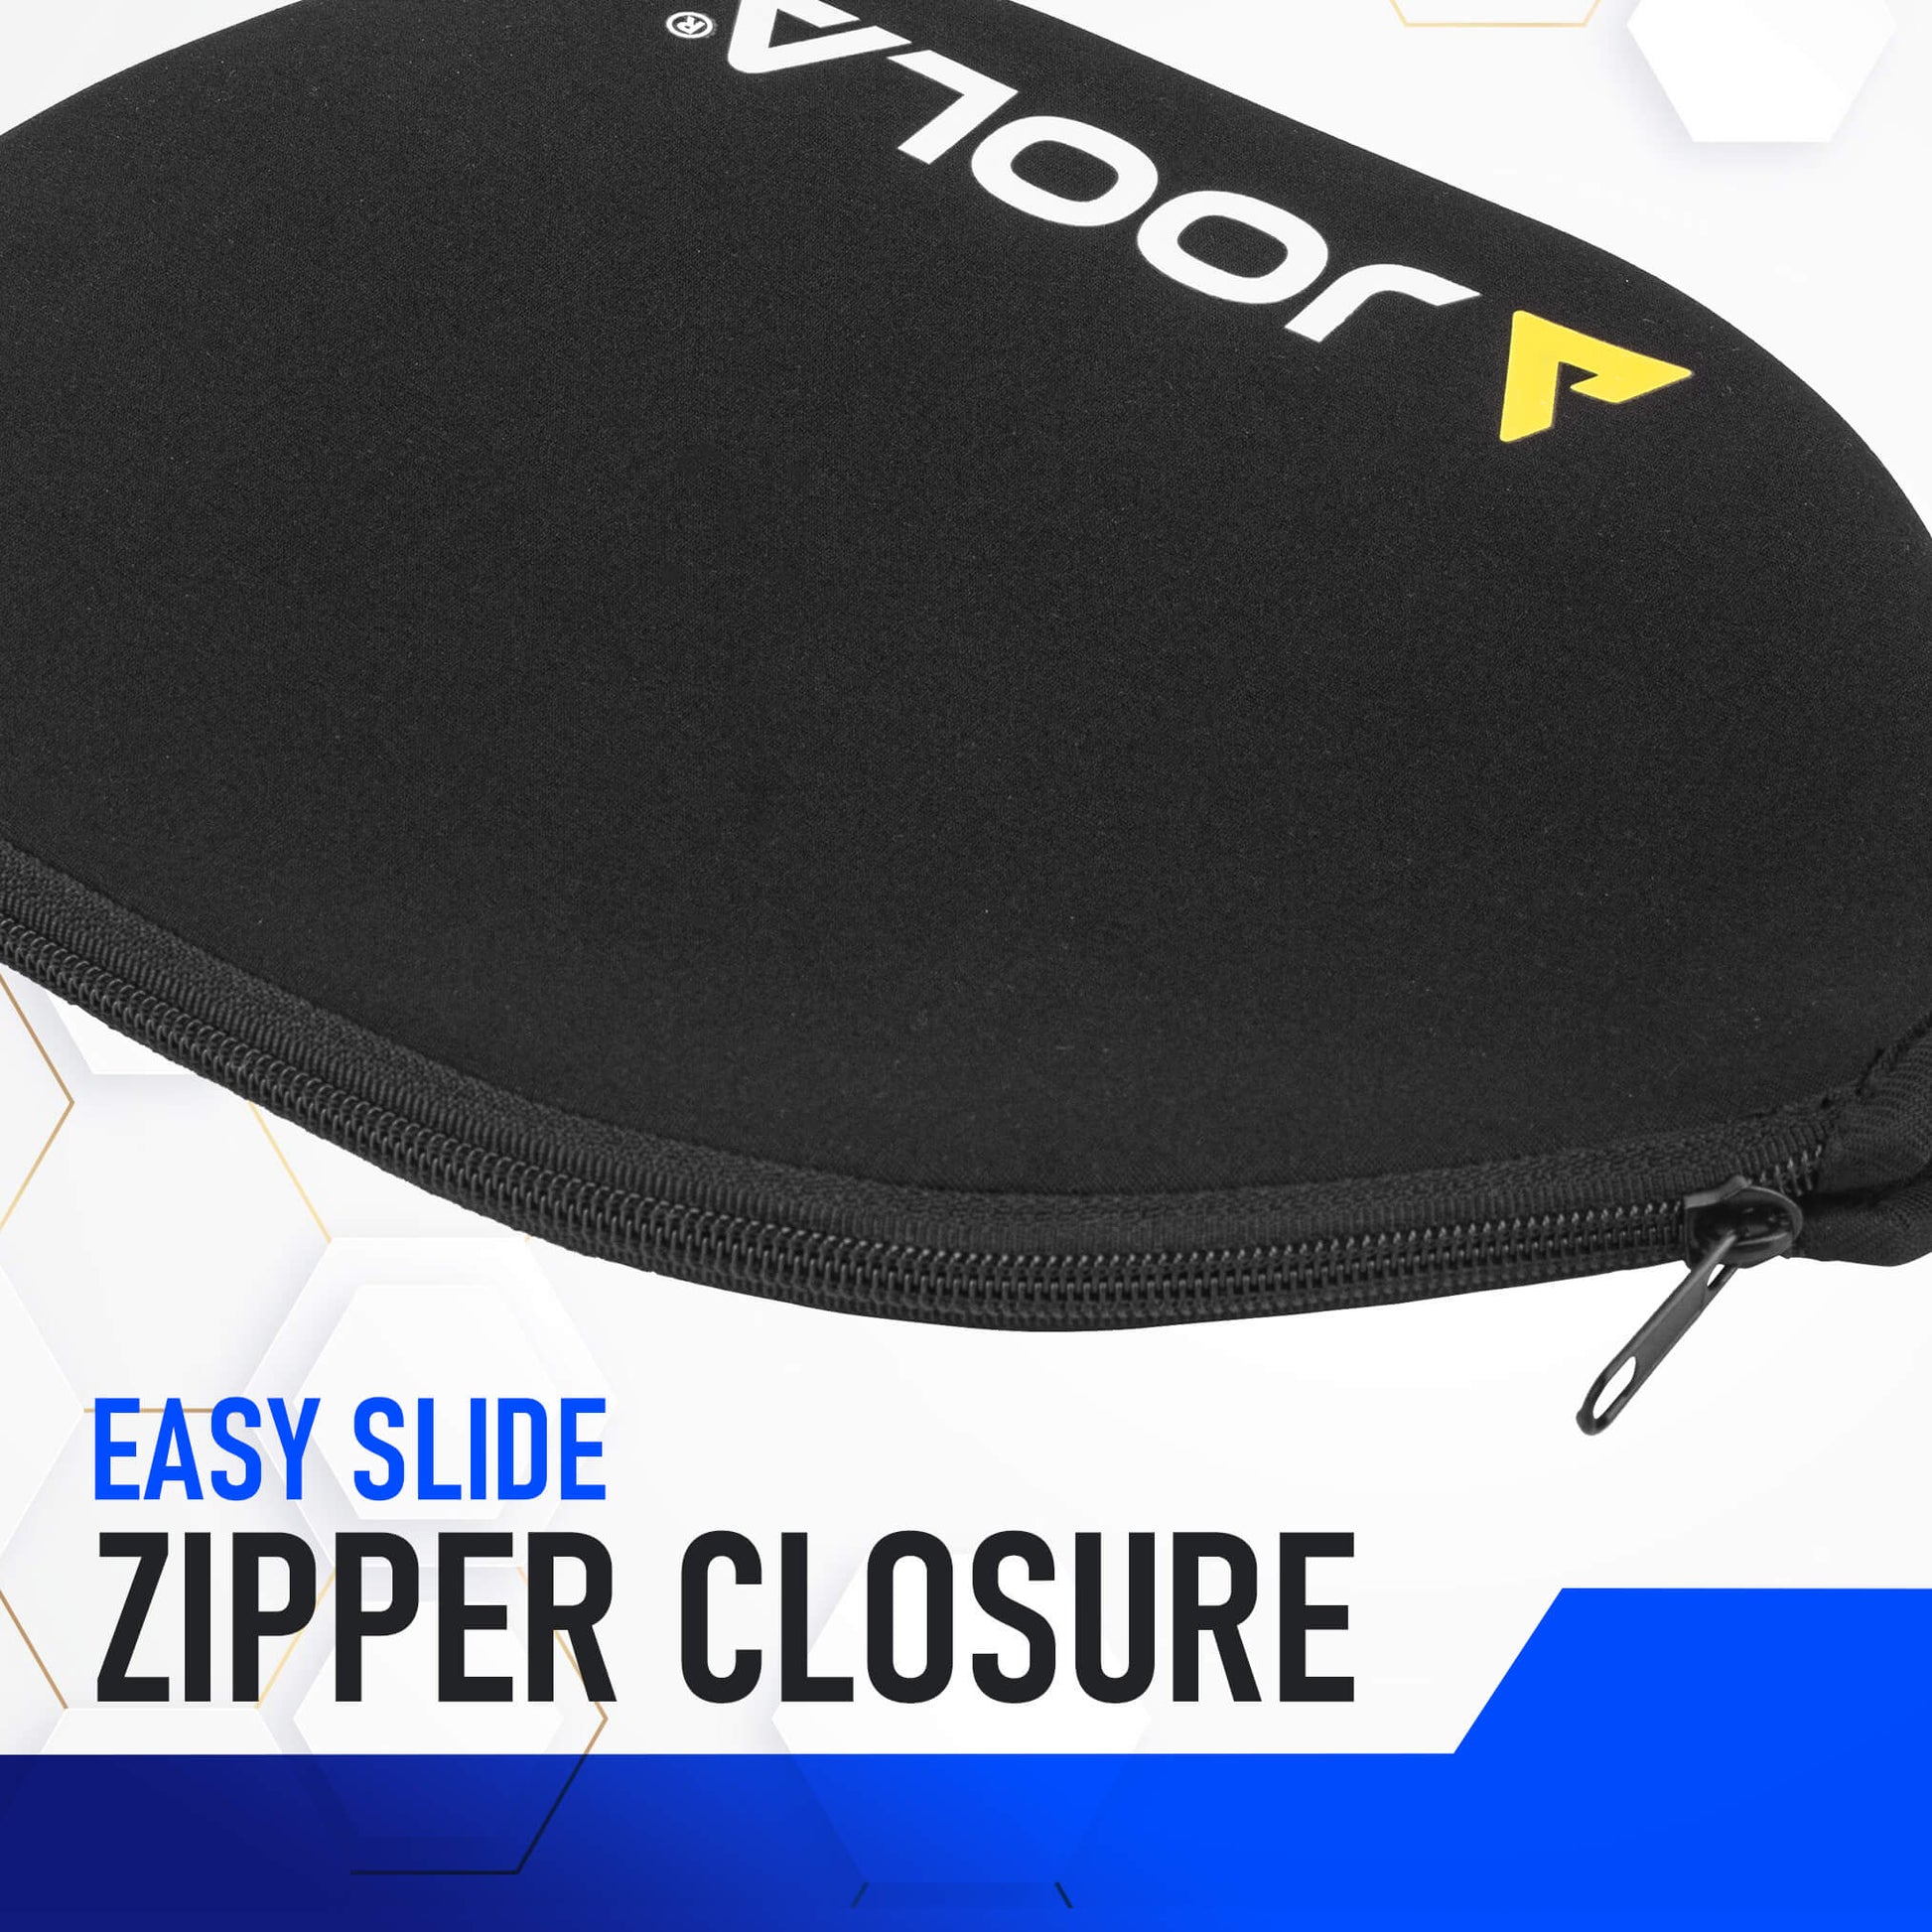 JOOLA Elongated Neoprene Sleeve Pickleball Paddle Cover features an easy slide zipper closure.